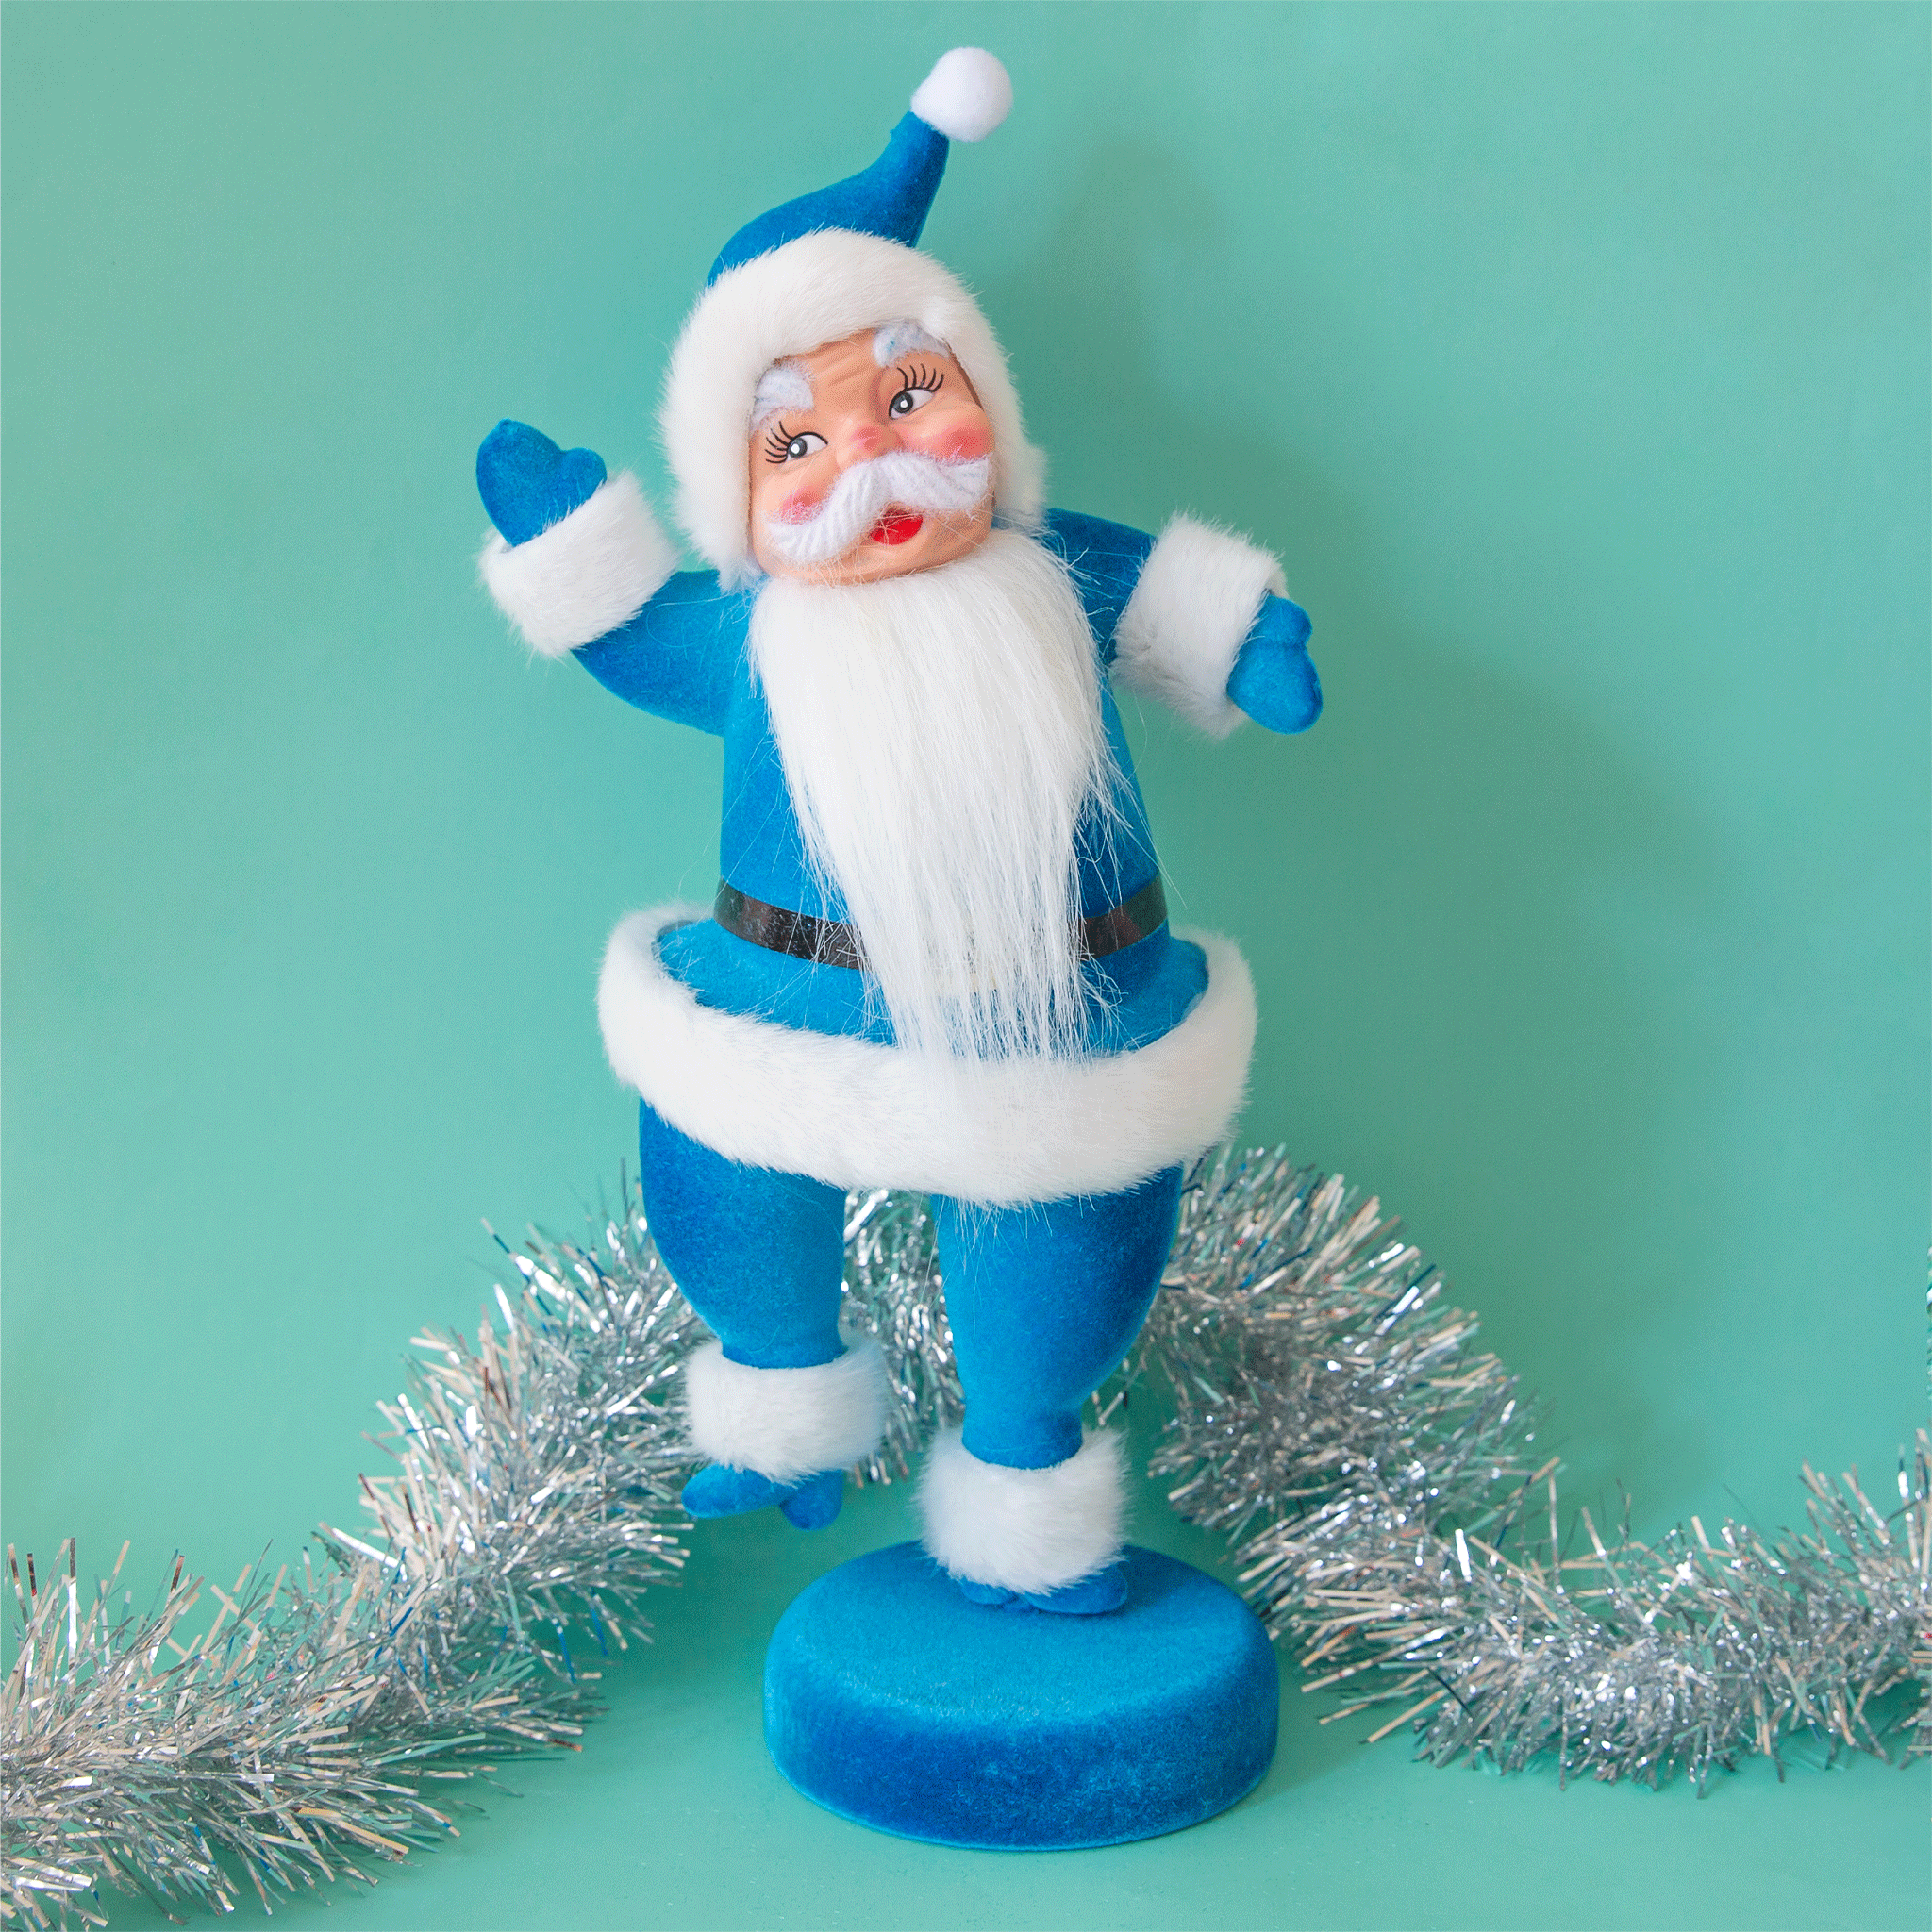 A blue Santa Christmas decoration with blue velvet suit on.